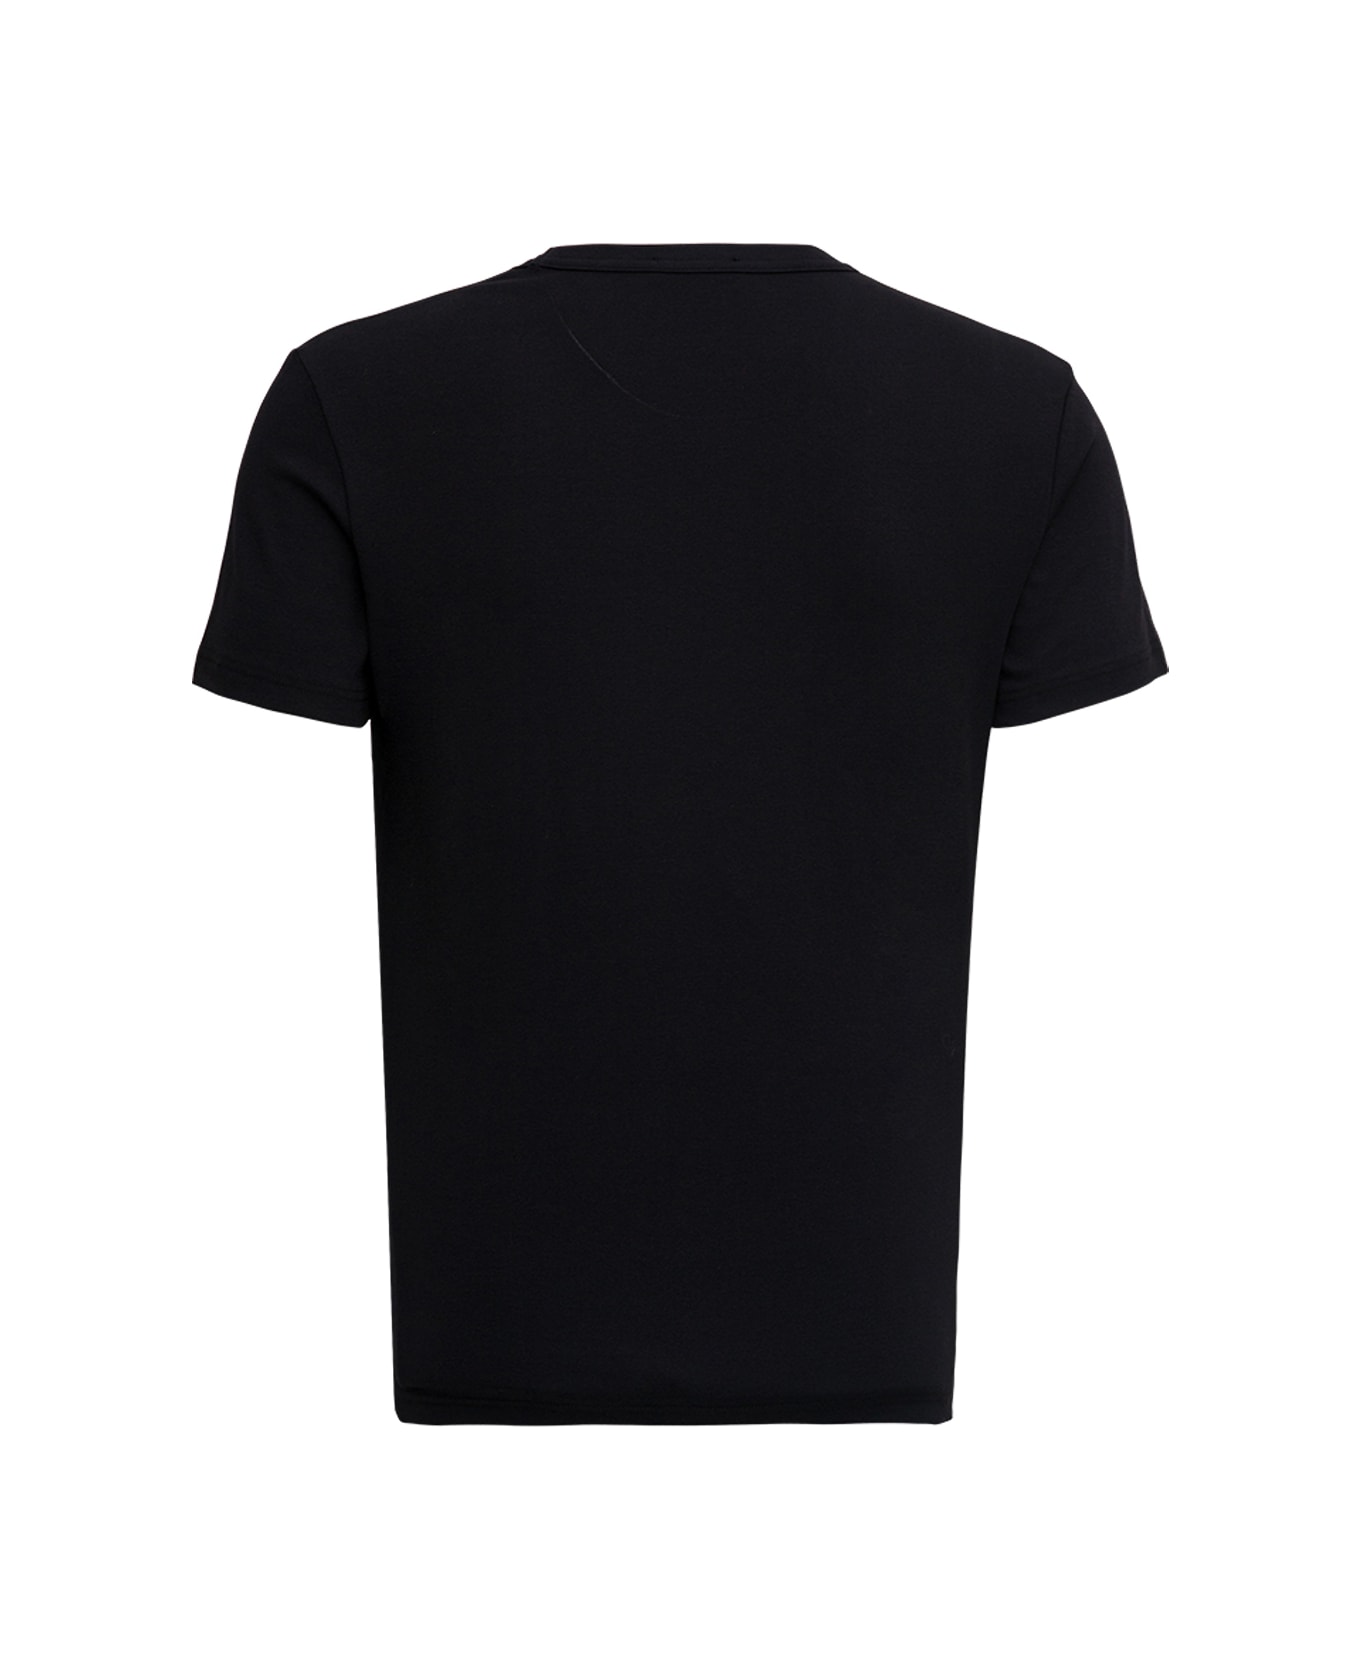 Tom Ford Black V-neck T-shirt Short Sleeves In Cotton Stretch Man - Black シャツ